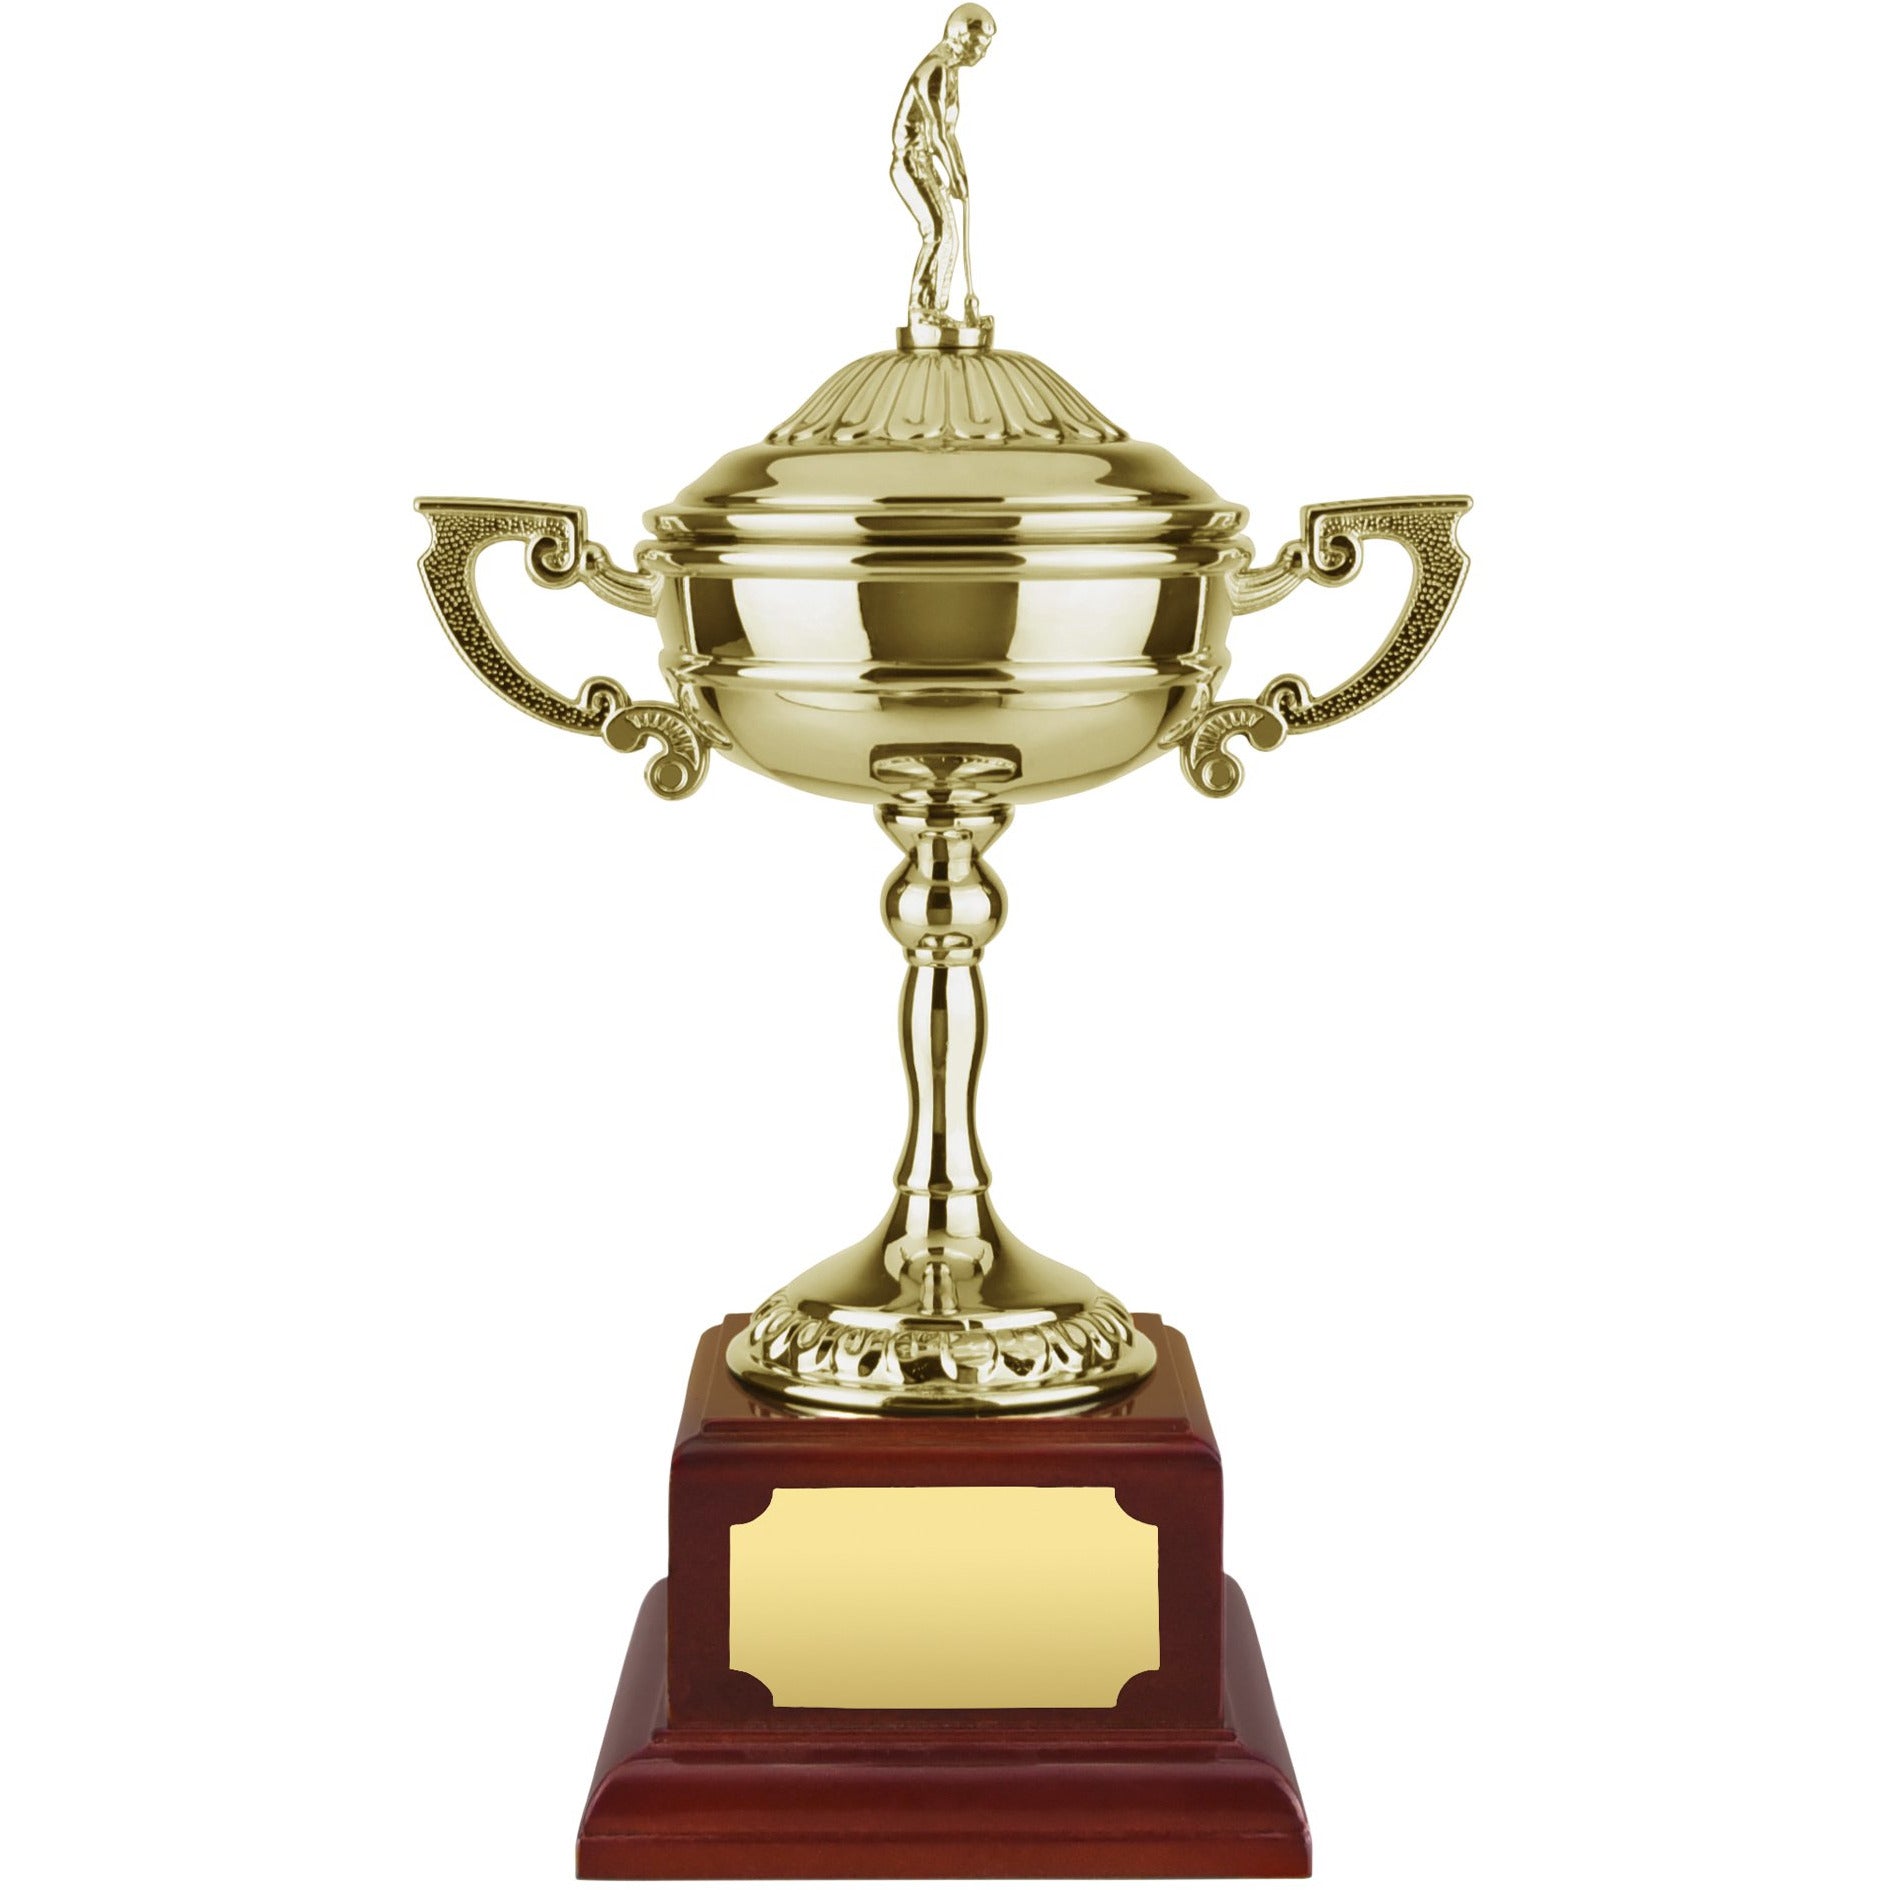 Gold Finish Endurance Golf Ryder Cup